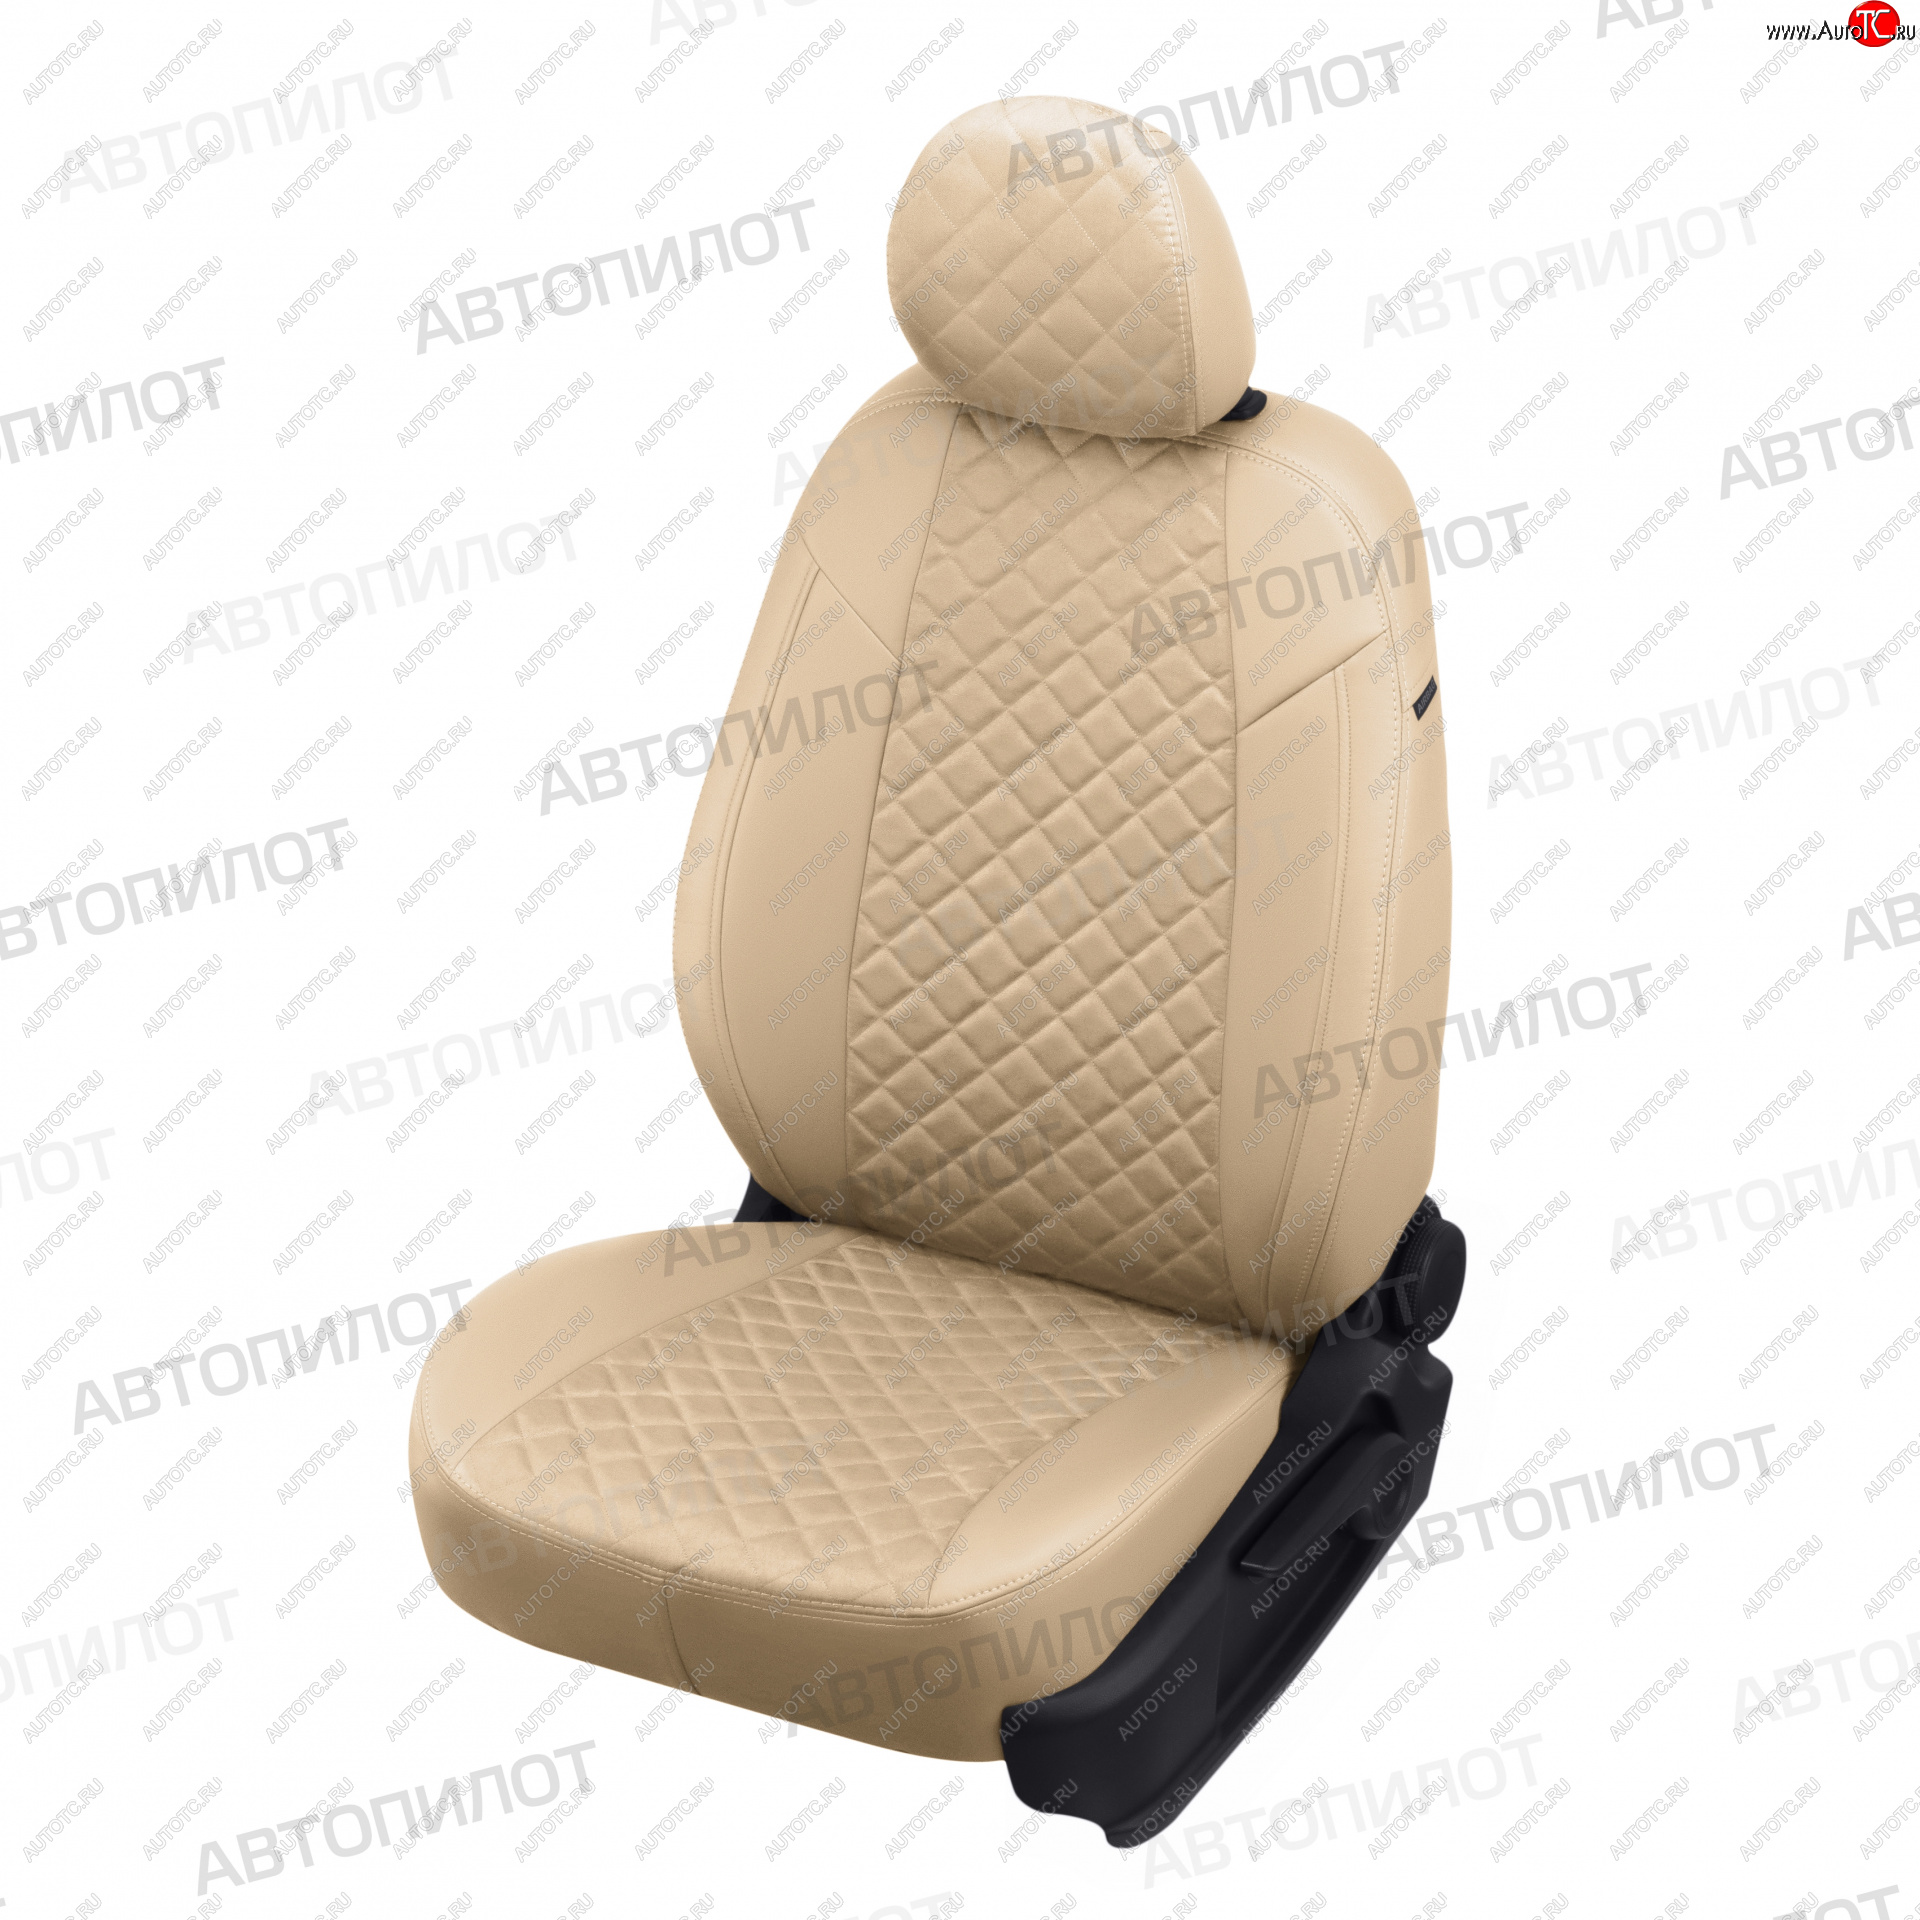 14 499 р. Чехлы сидений (Titanium, экокожа/алькантара) Автопилот Ромб  Ford Kuga  1 (2008-2013) (бежевый)